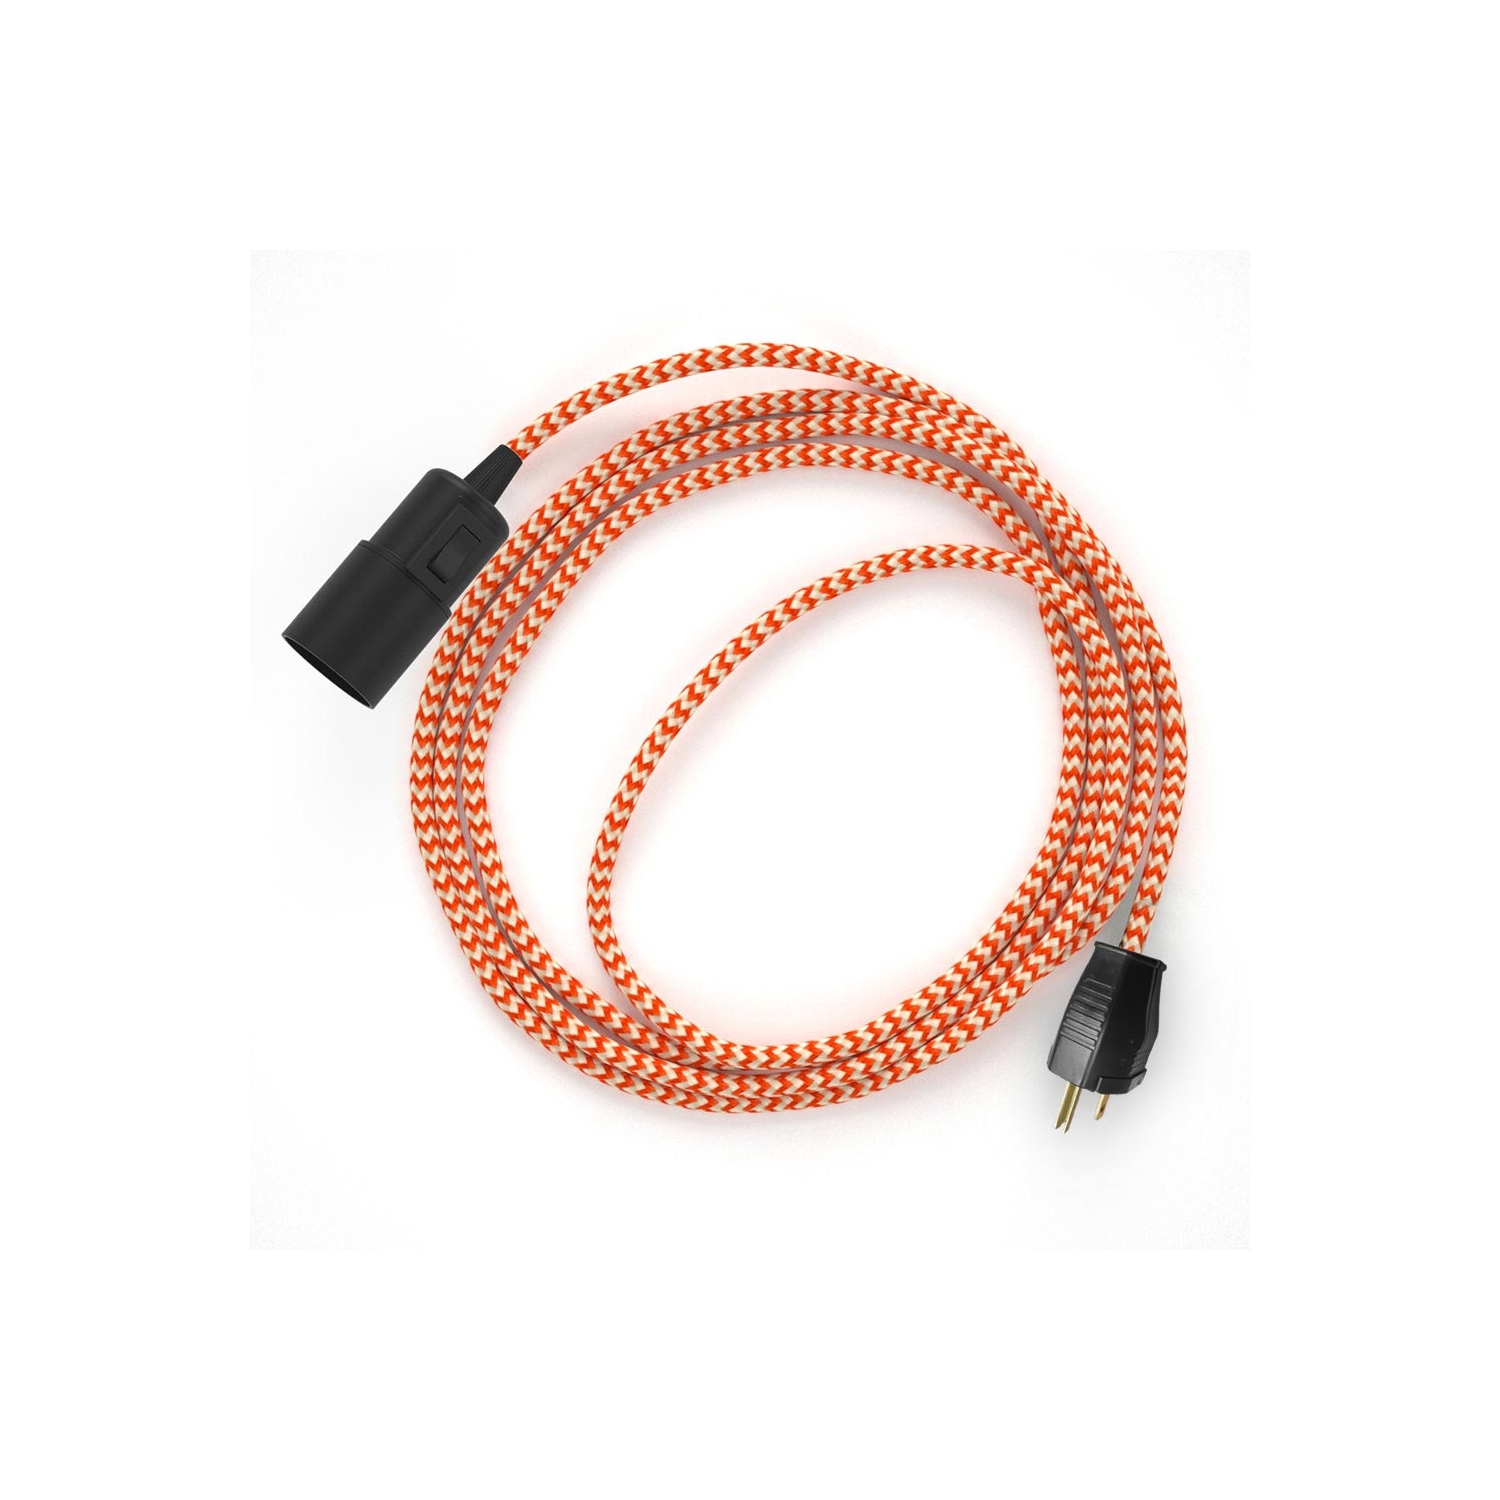 Plug-in Pendant with switch on socket | RZ15 Orange & White Chevron